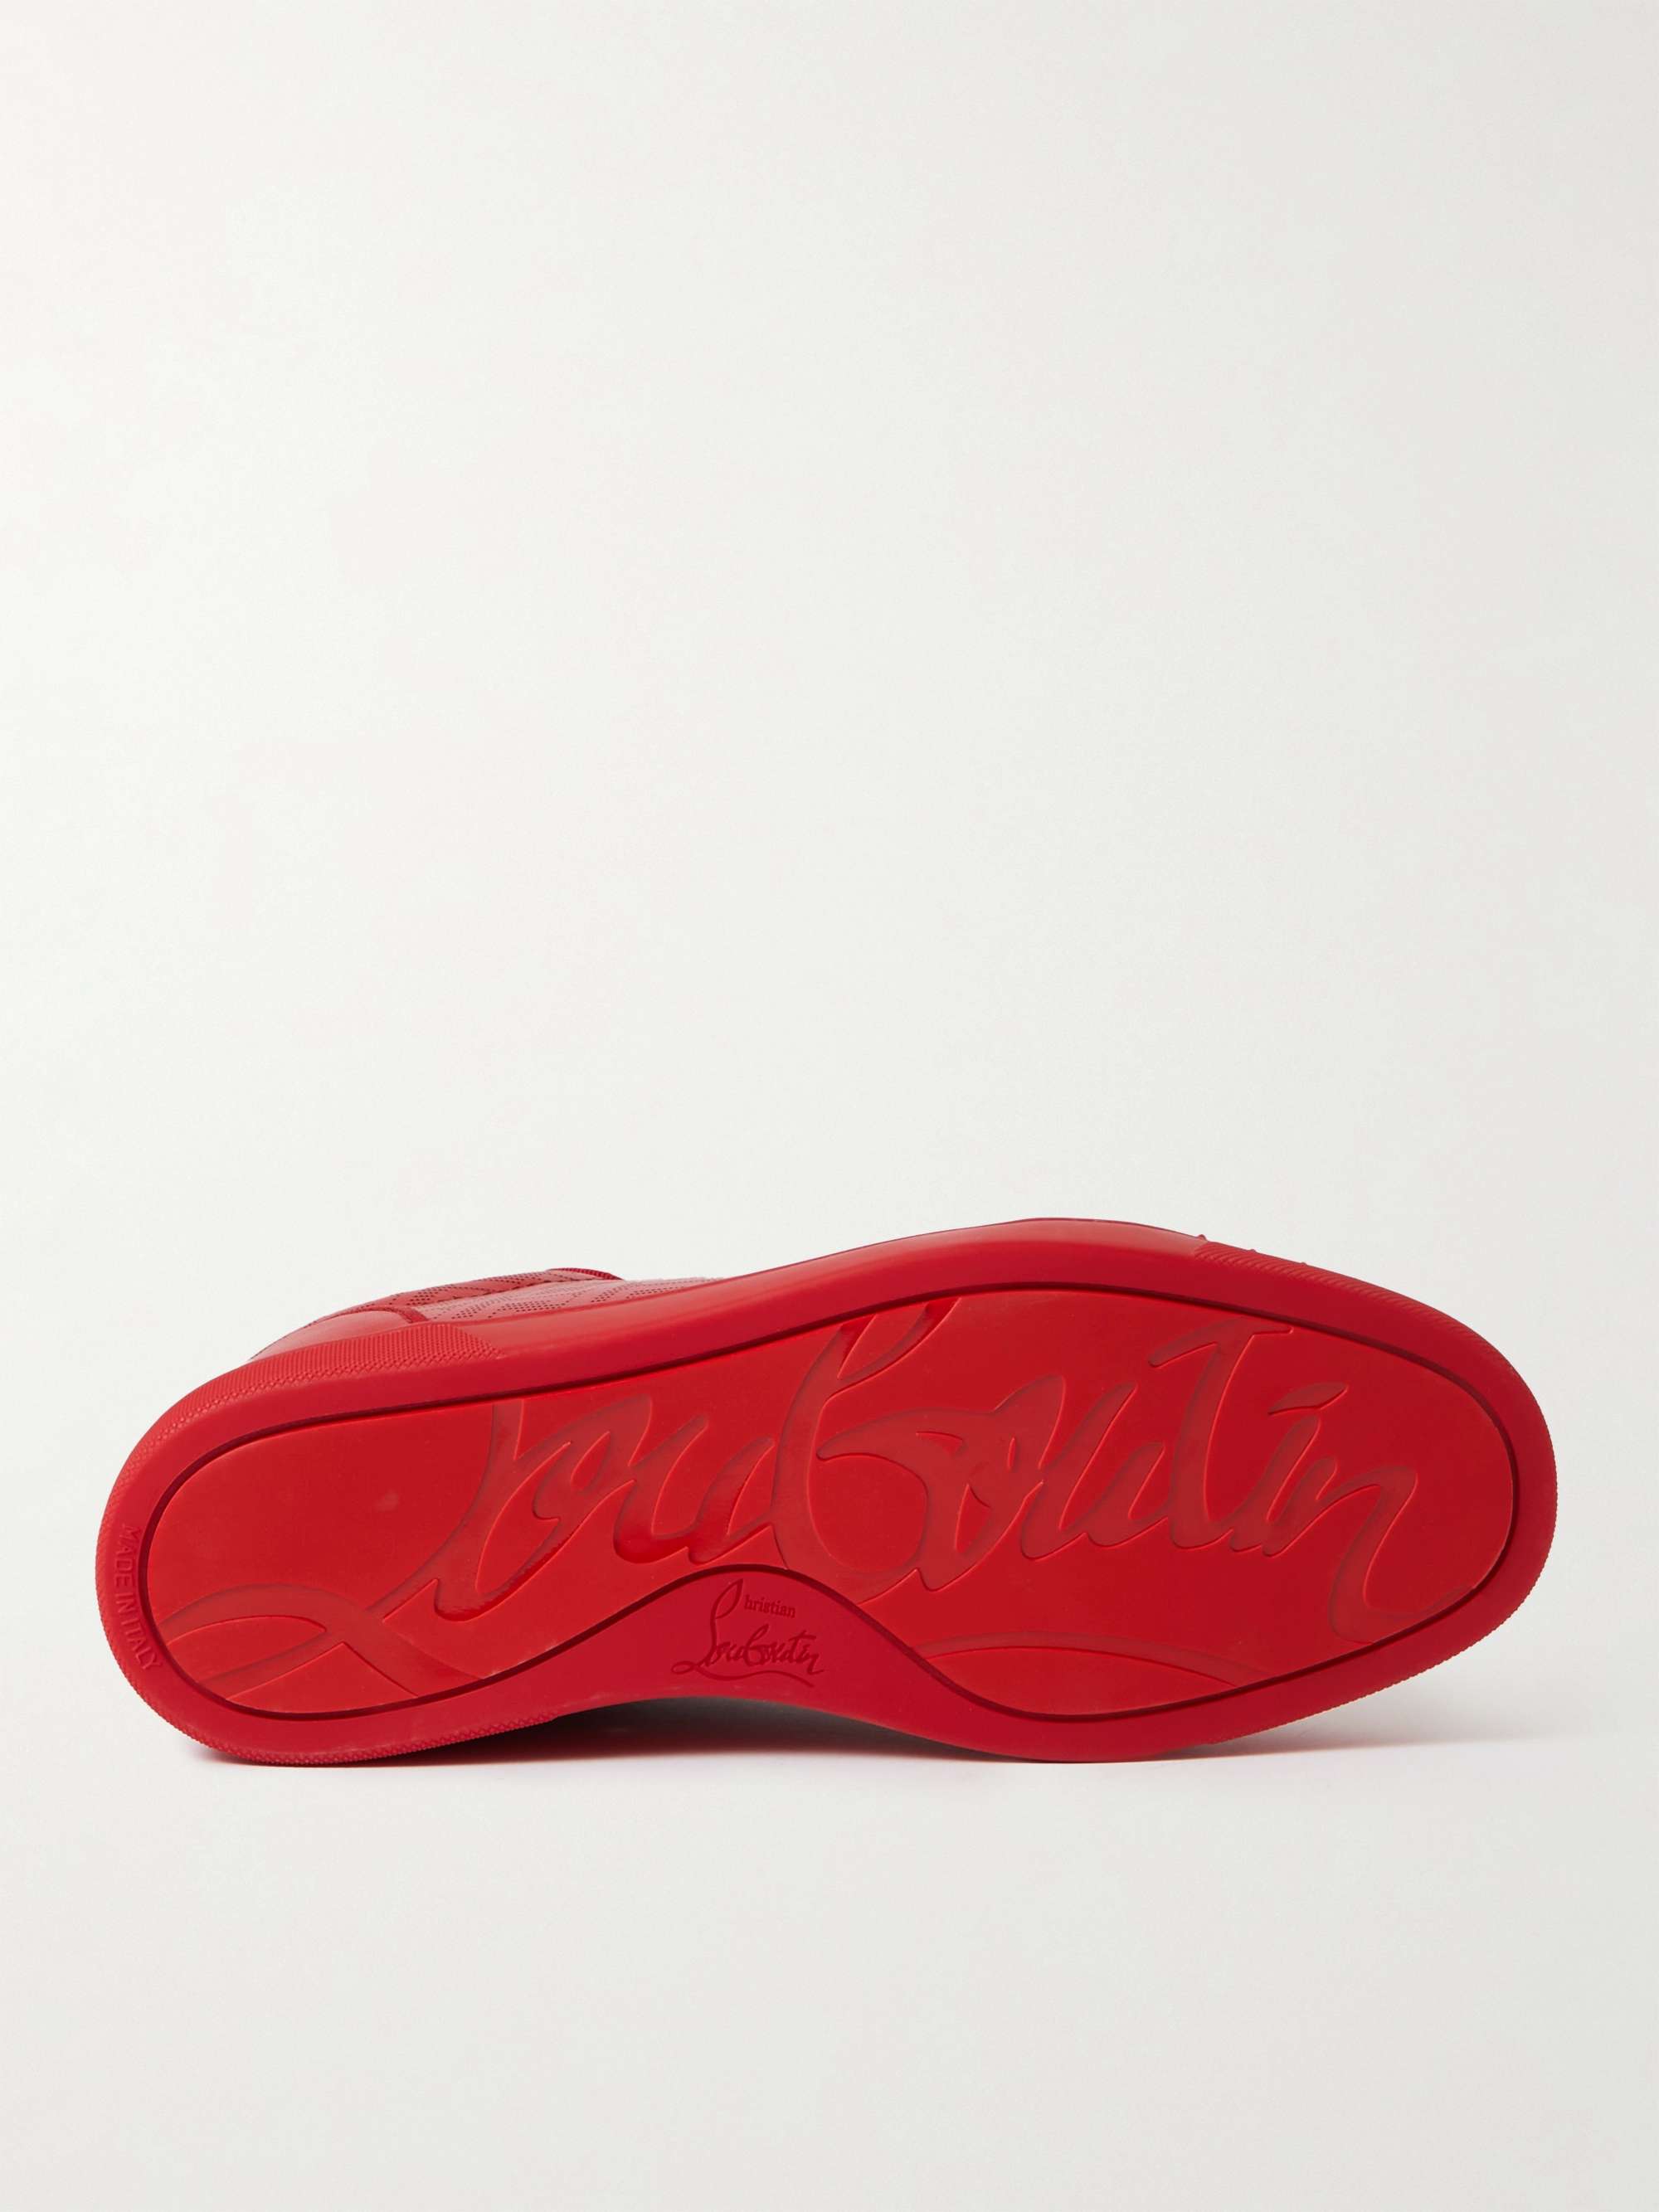 Christian Louboutin Mens Orlato Flat Red High Spikes Sneaker Shoes 40 7  $1300 | eBay